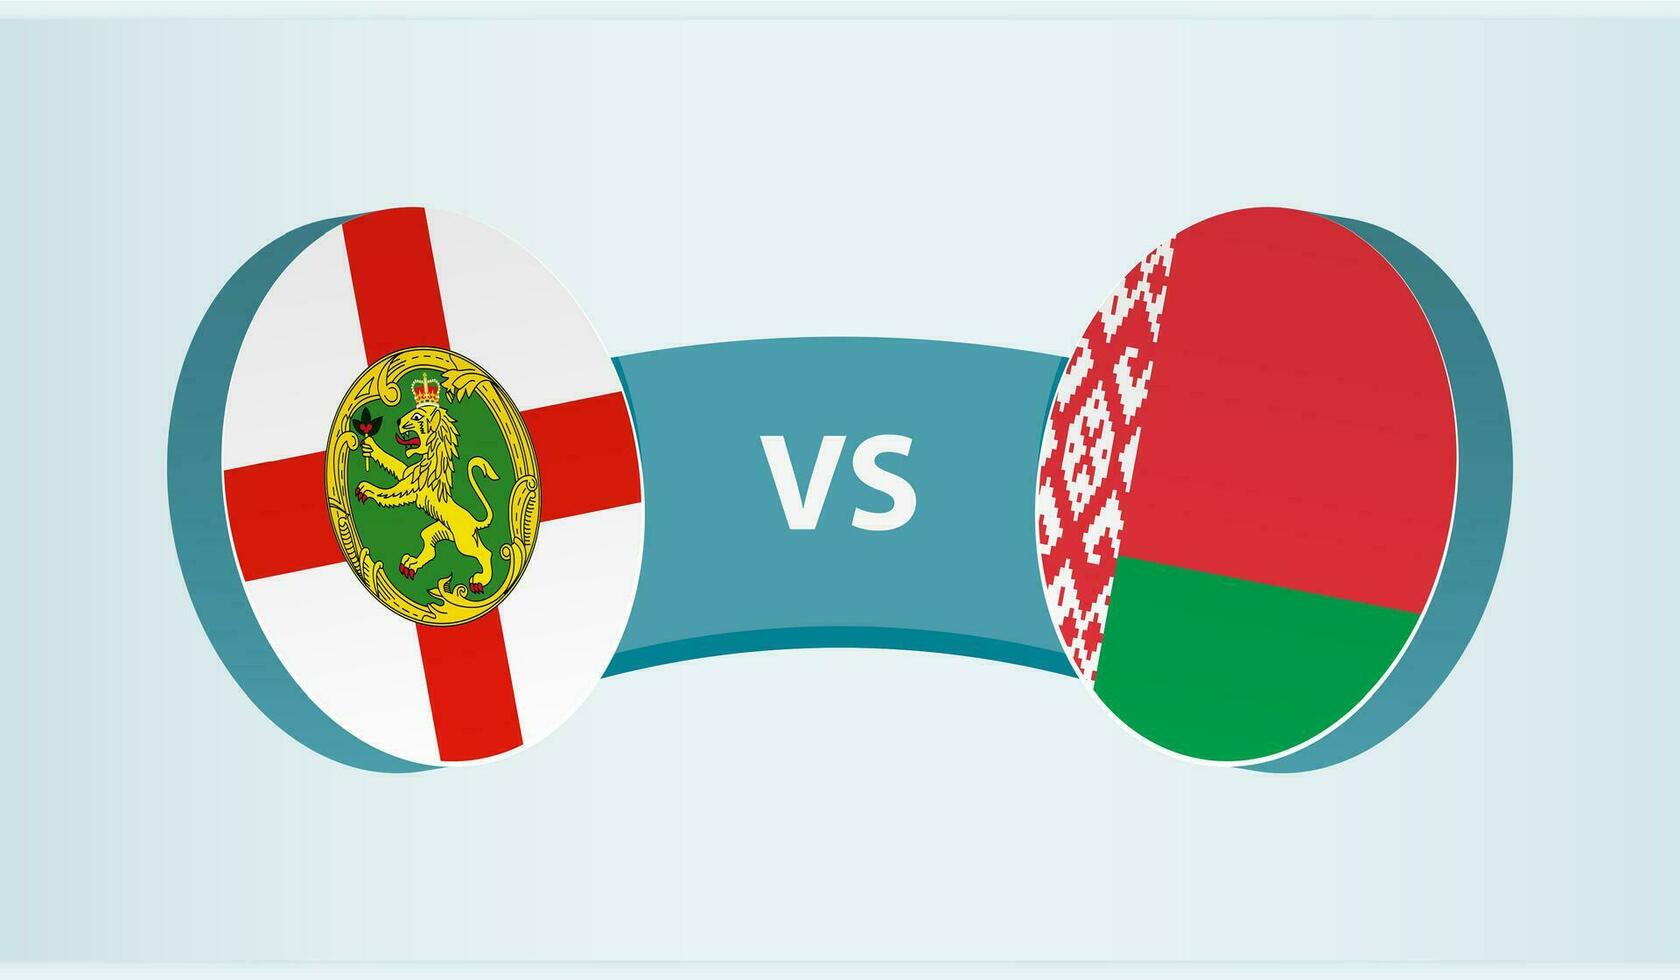 Alderney versus Belarus, team sports competition concept. vector